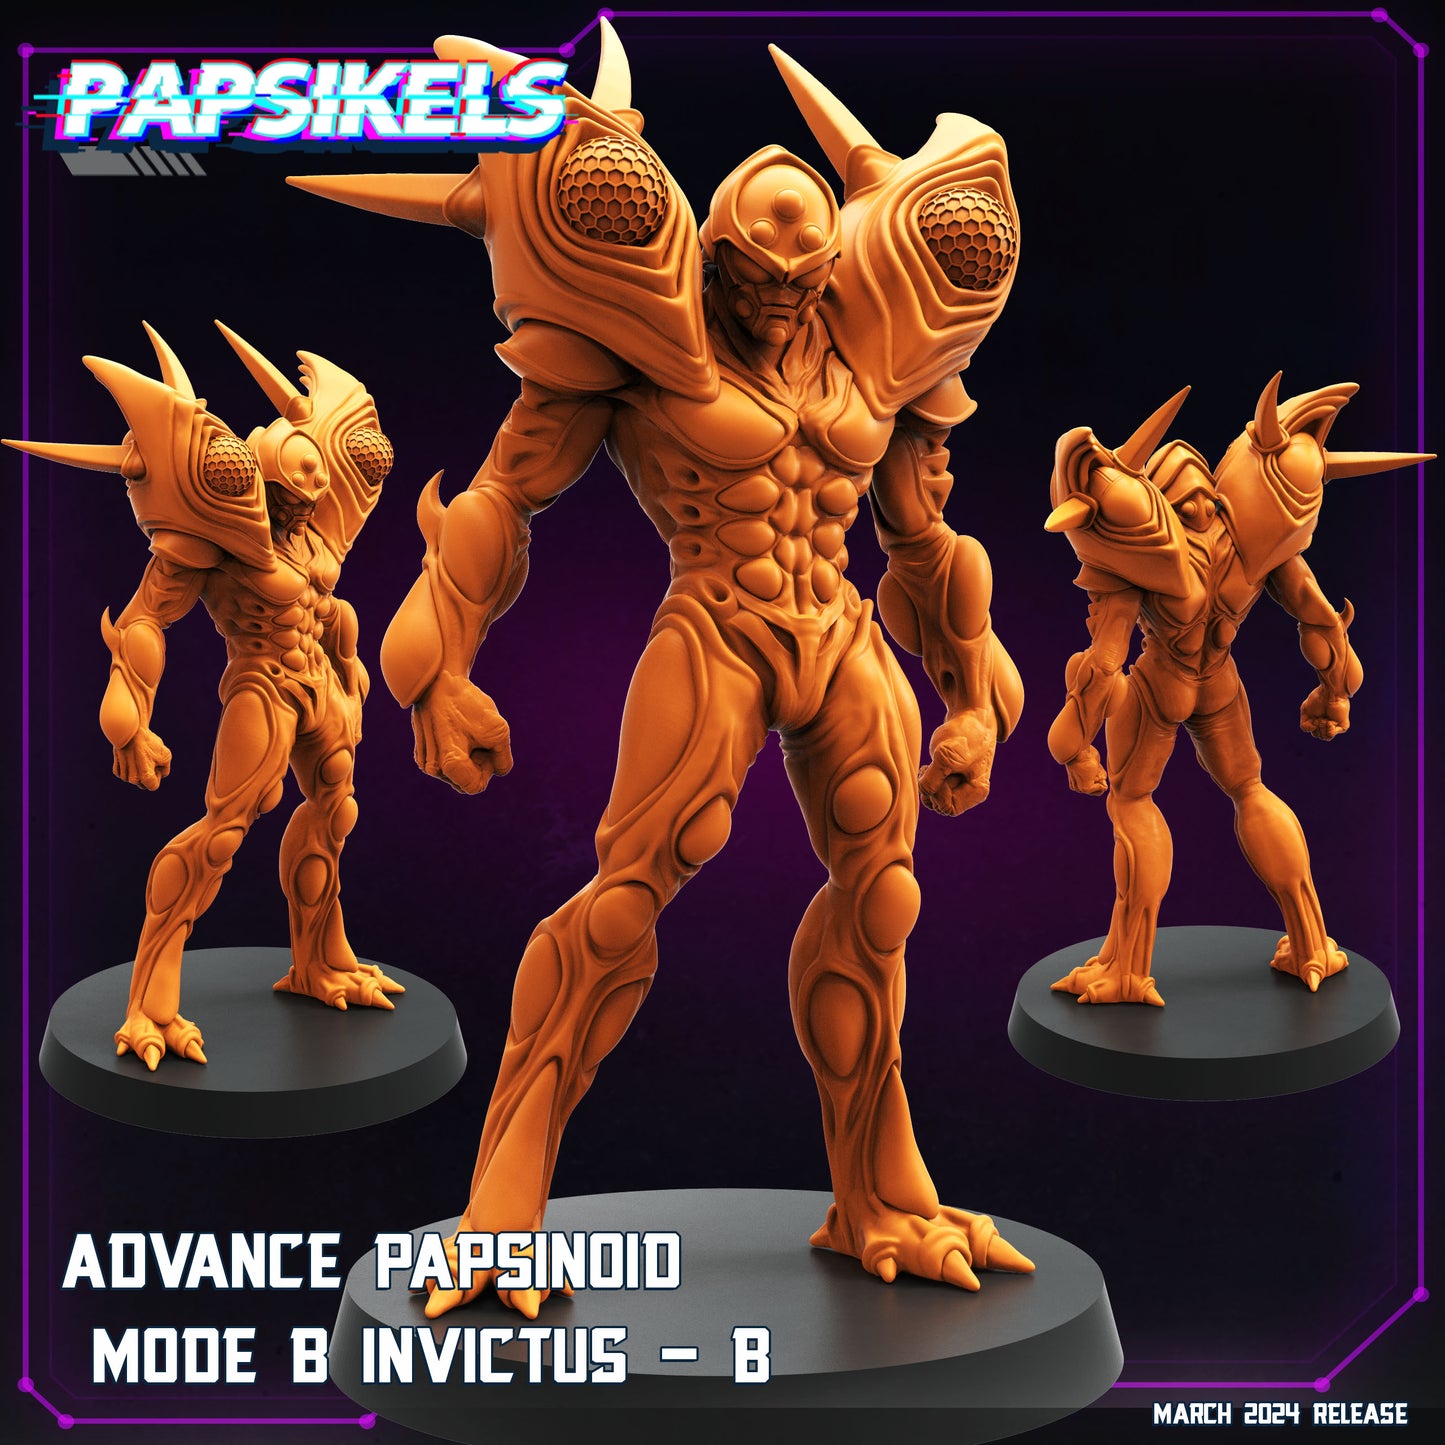 Advanced Papsinoid Mode B Invictus